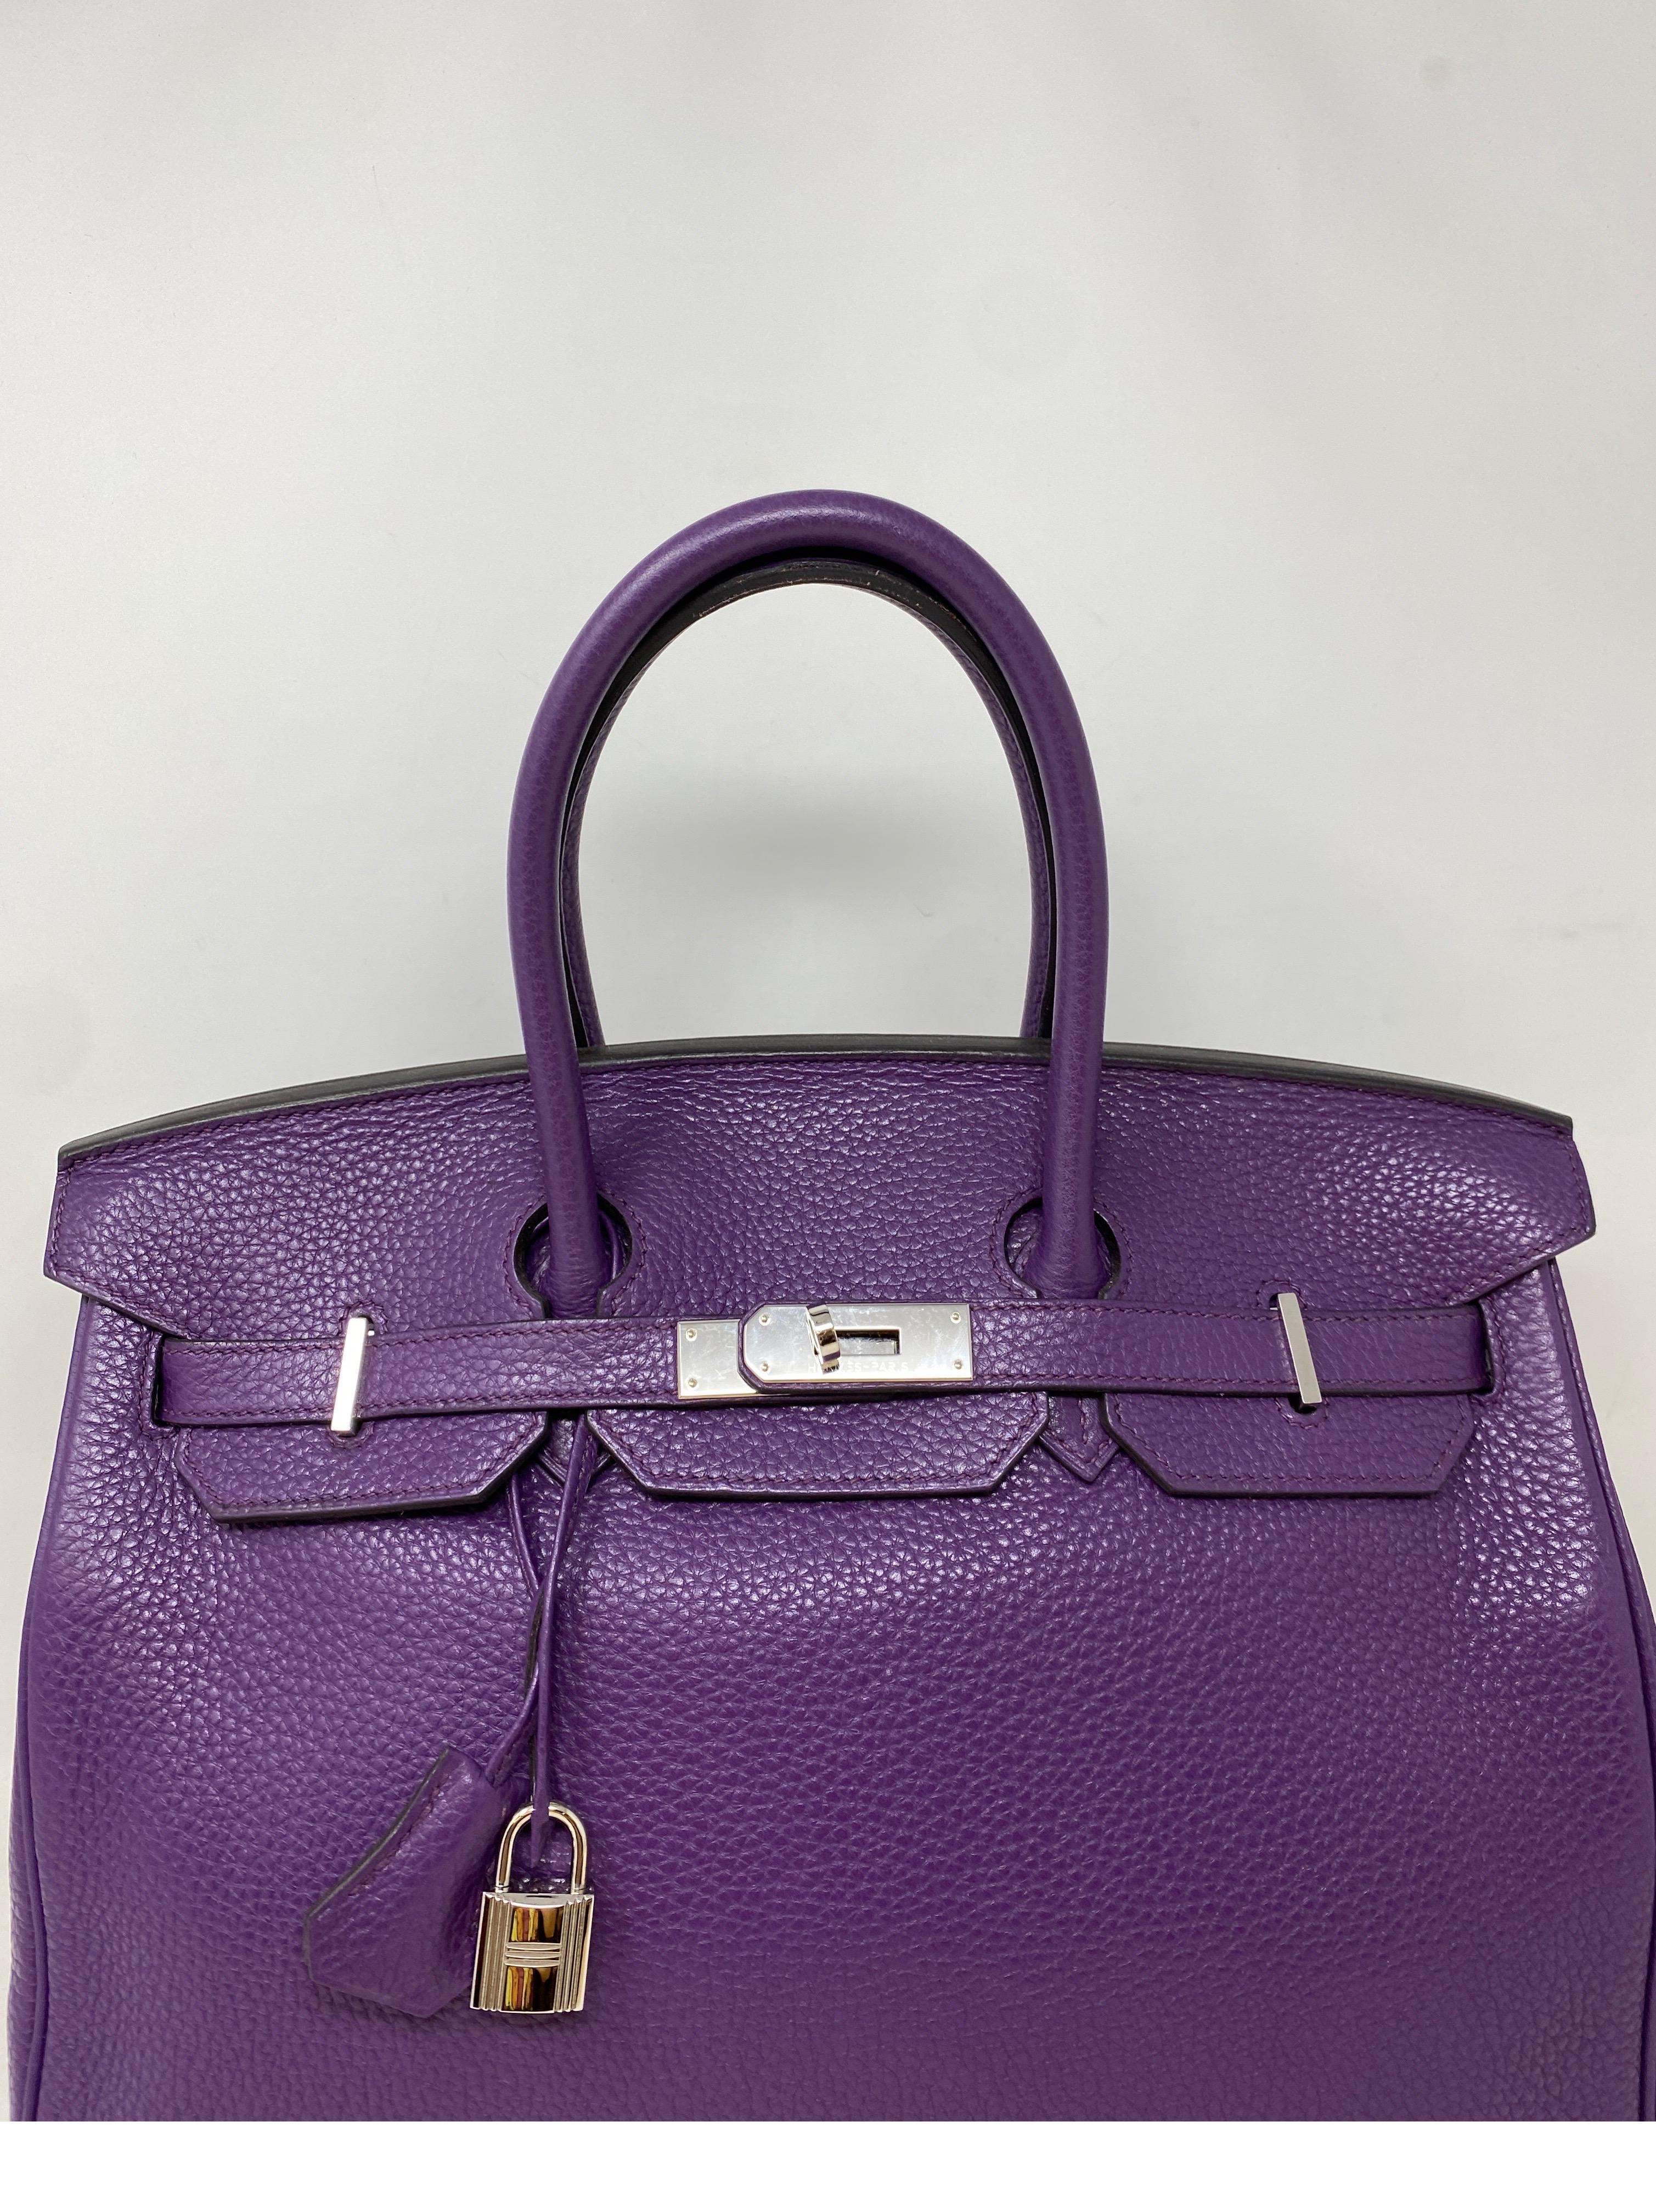 Hermes Ultra Viloet Birkin 35 Bag. Rare purple color Birkin. Good condition. Palladium hardware. Clemence leather. Includes clochette, lock, keys, and dust cover. Guaranteed authentic. 